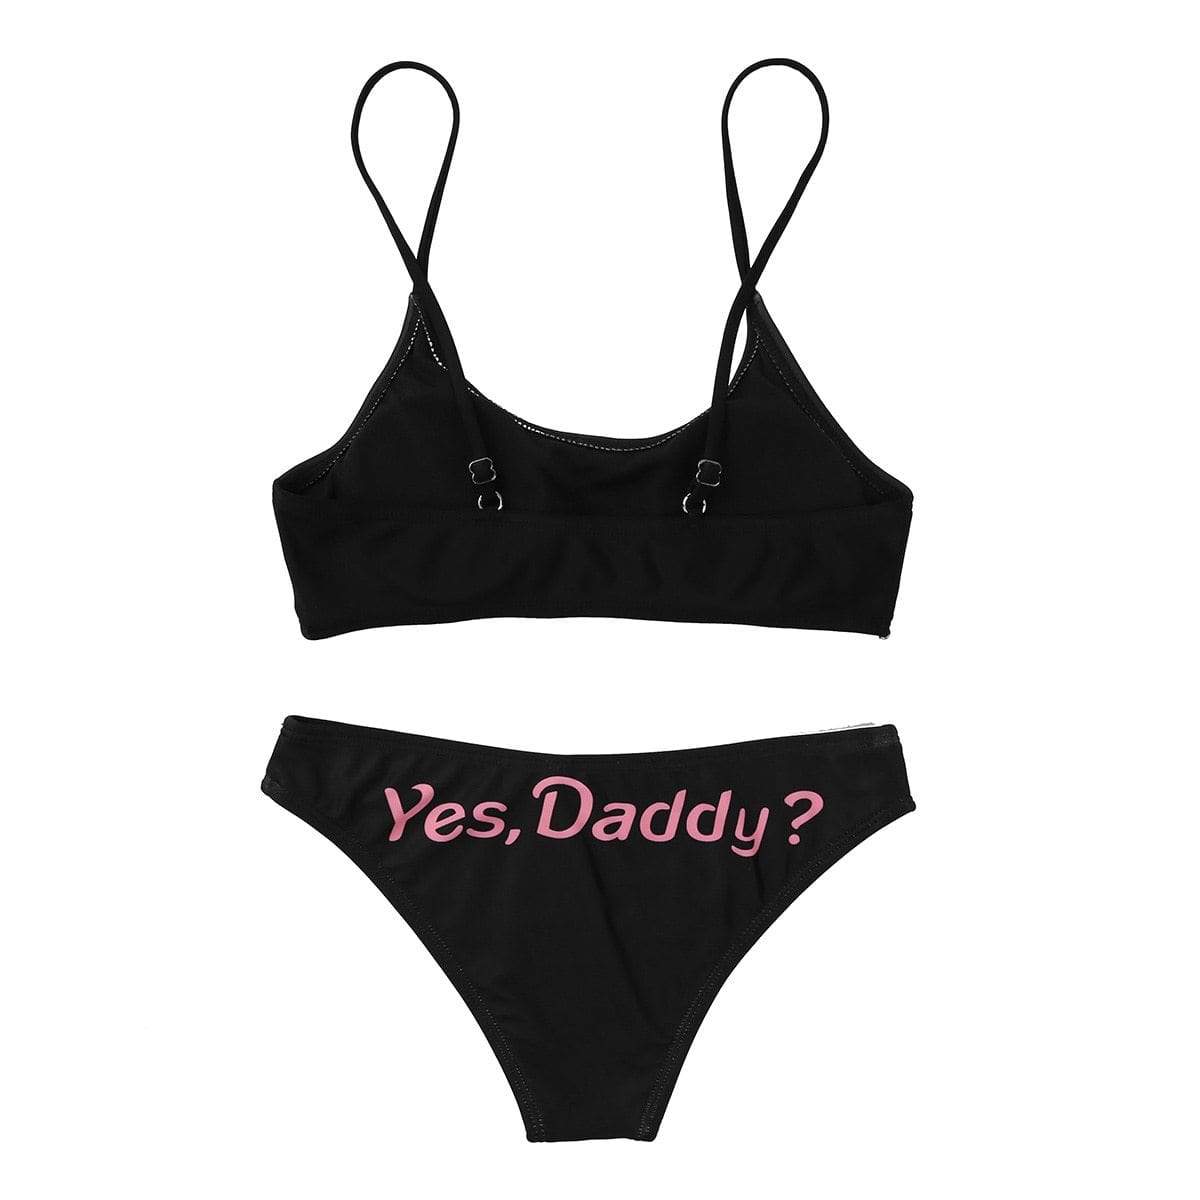 Come Here Daddy Underwear Set – Kinky Cloth